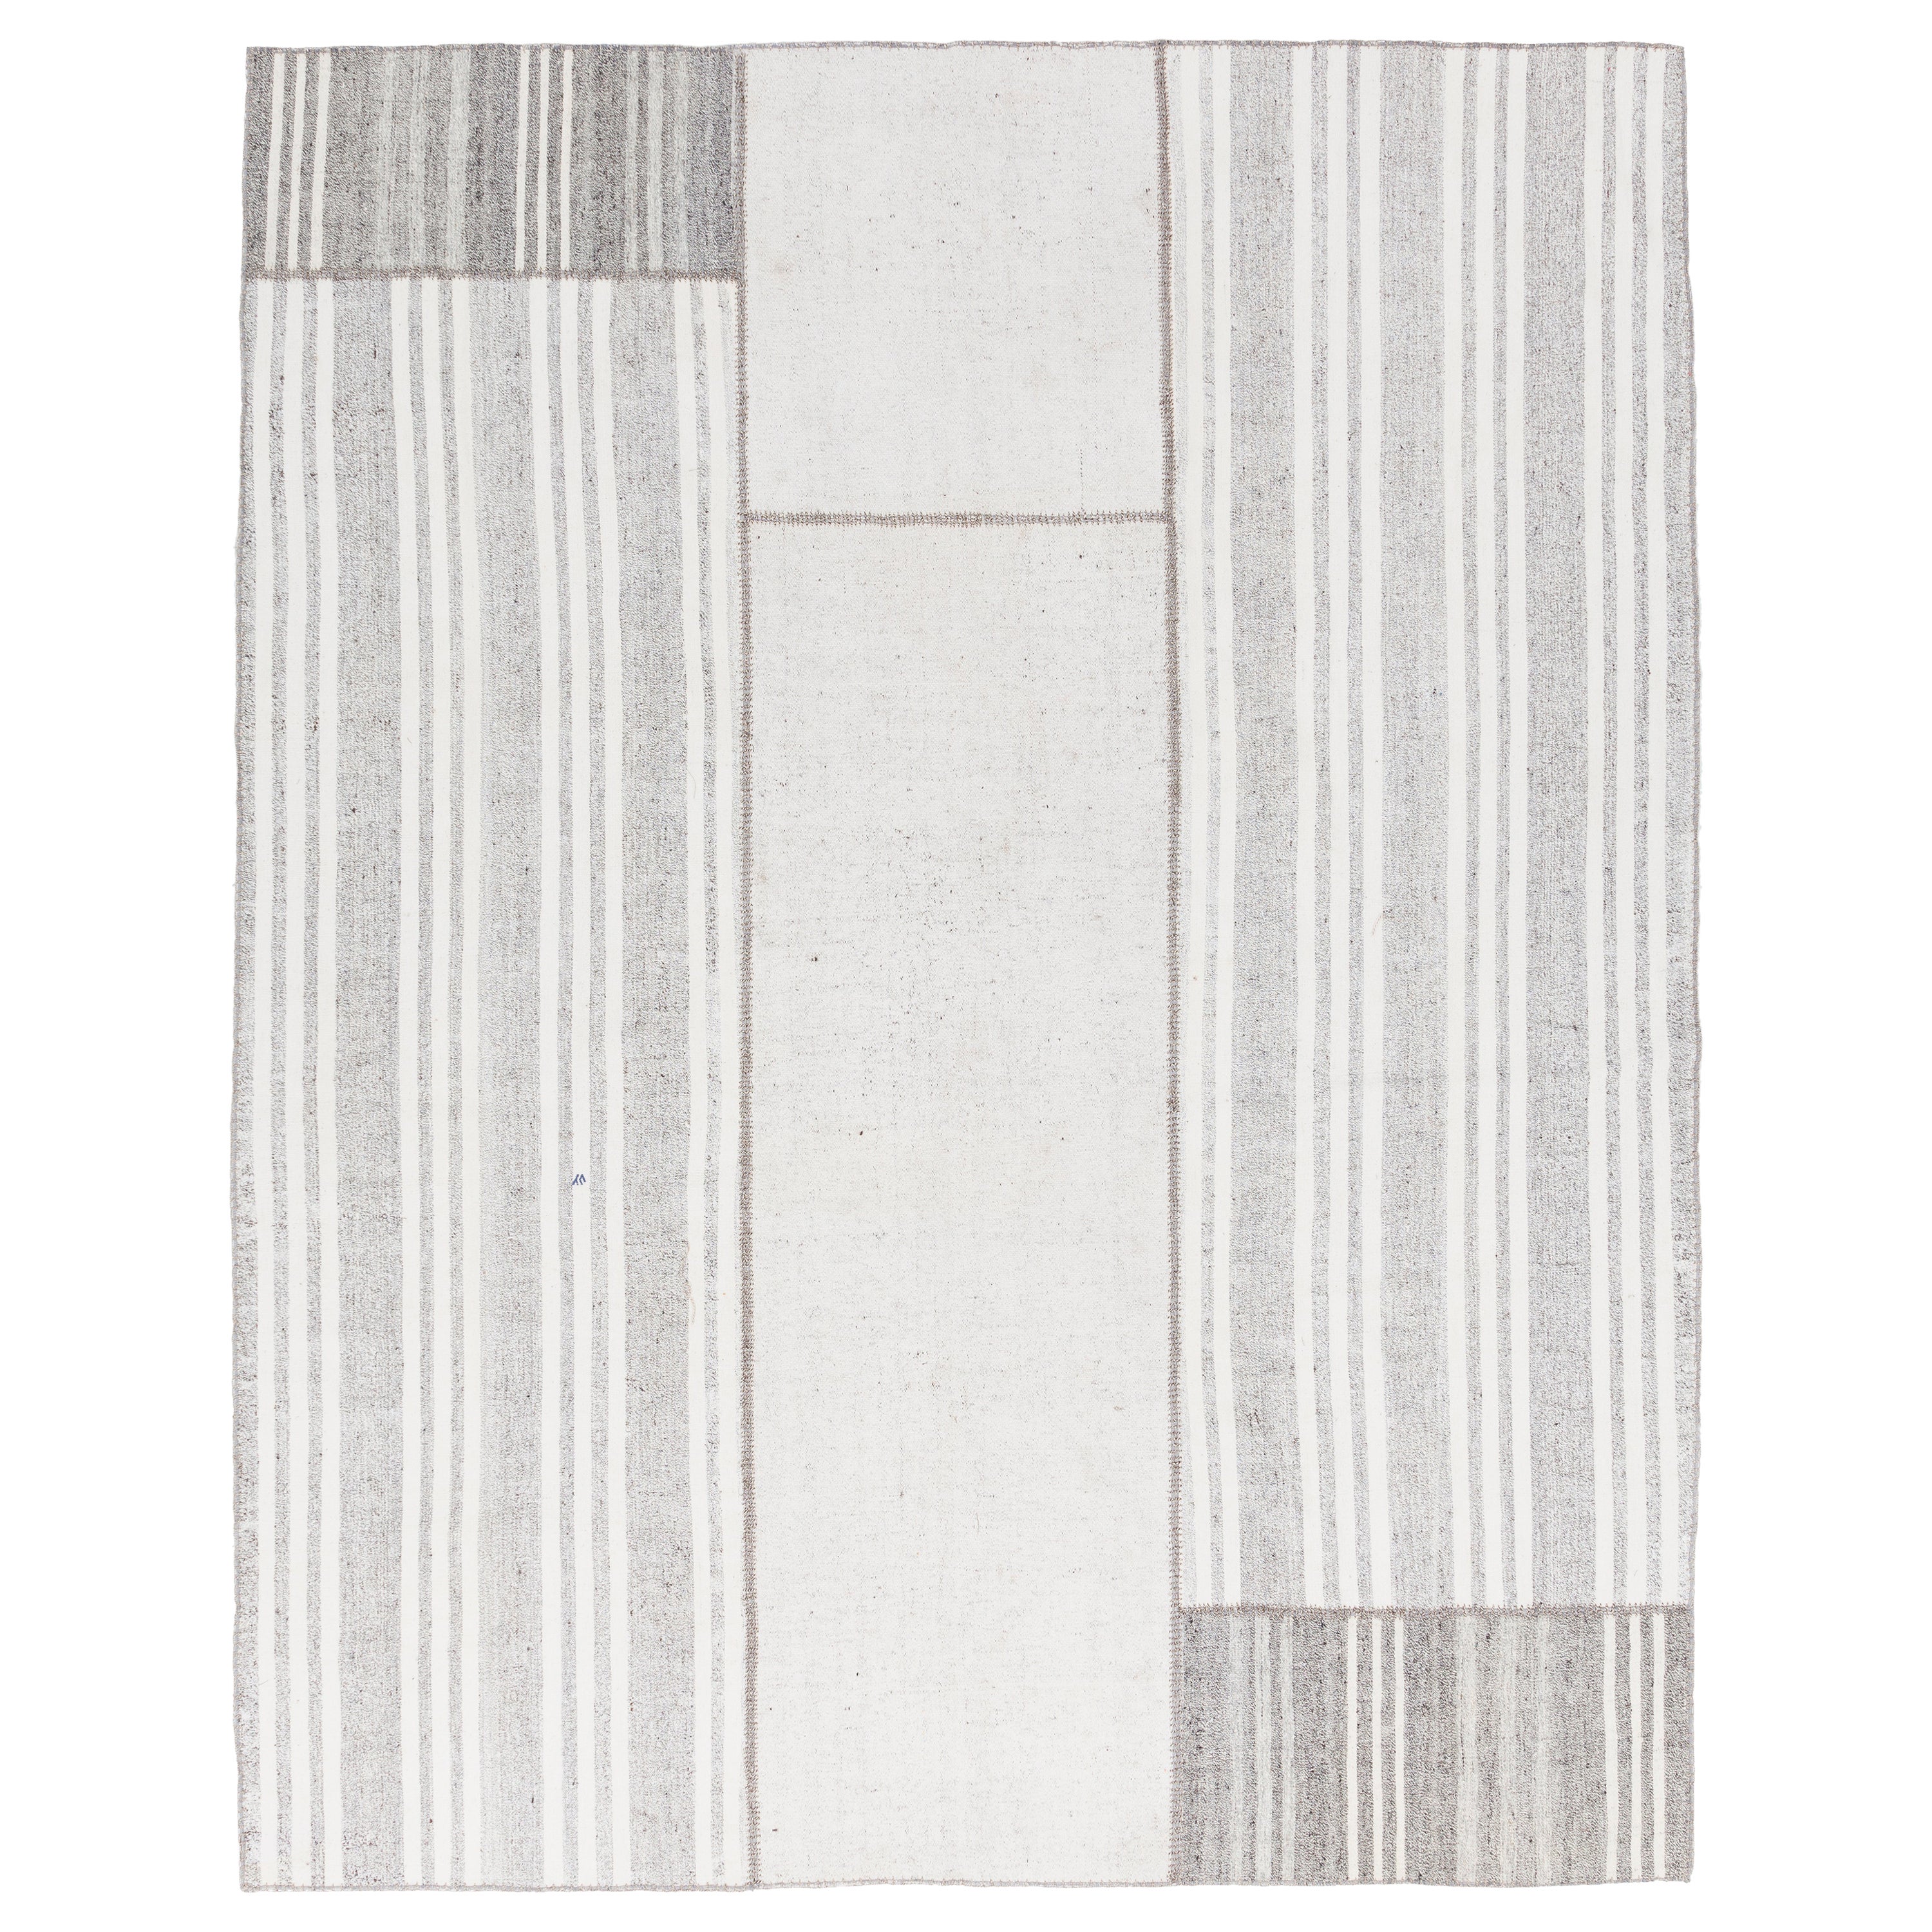 8.4x10.3 Ft Hand-Woven Vintage Cotton Anatolian Kilim in Gray with White Stripes